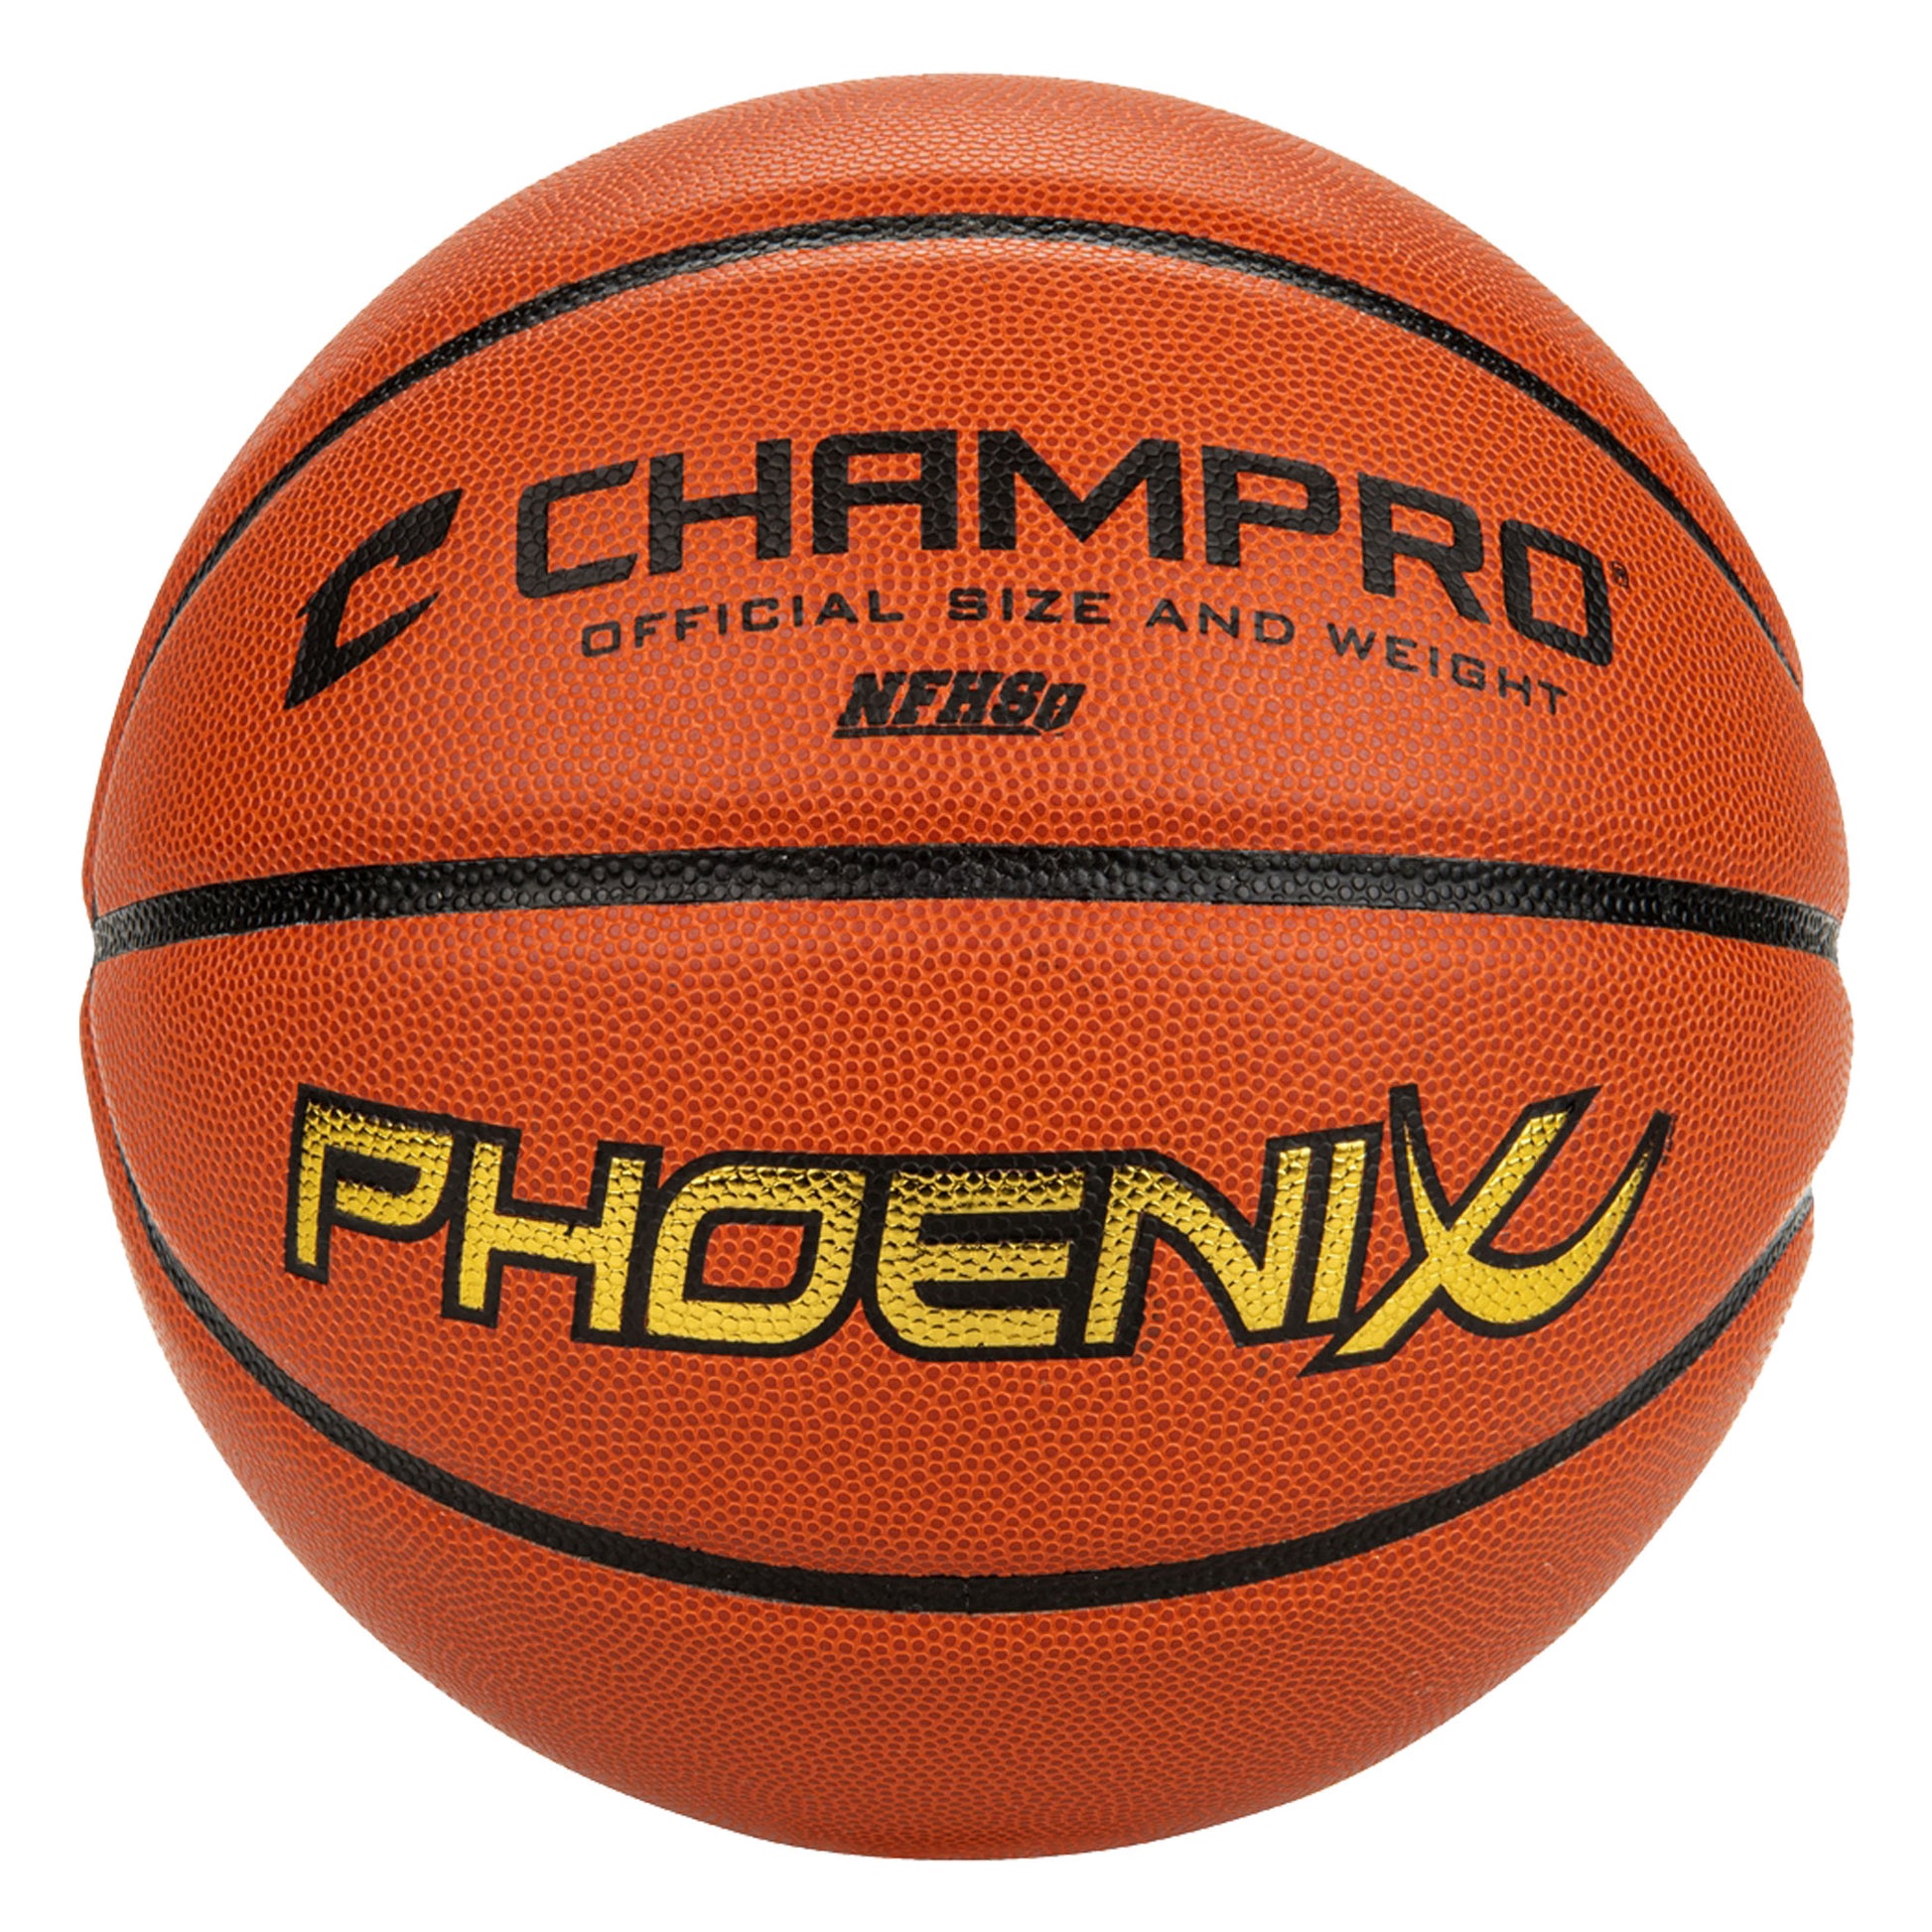 Champro Sports Phoenix Microfiber Indoor Basketball Front Face